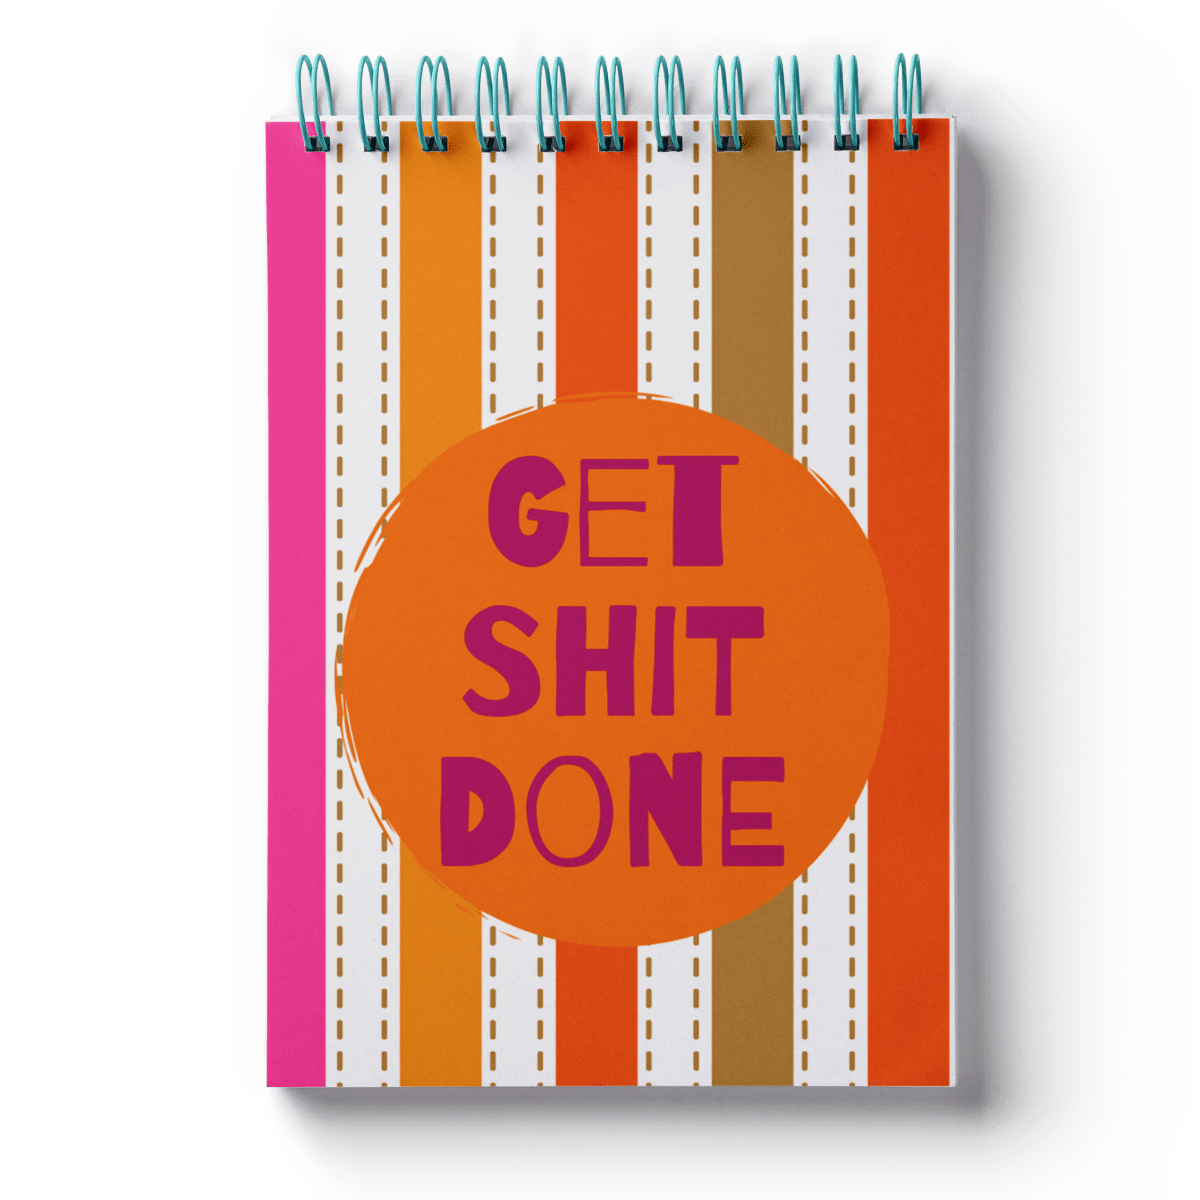 Get Shit Done - Pocket Notepad